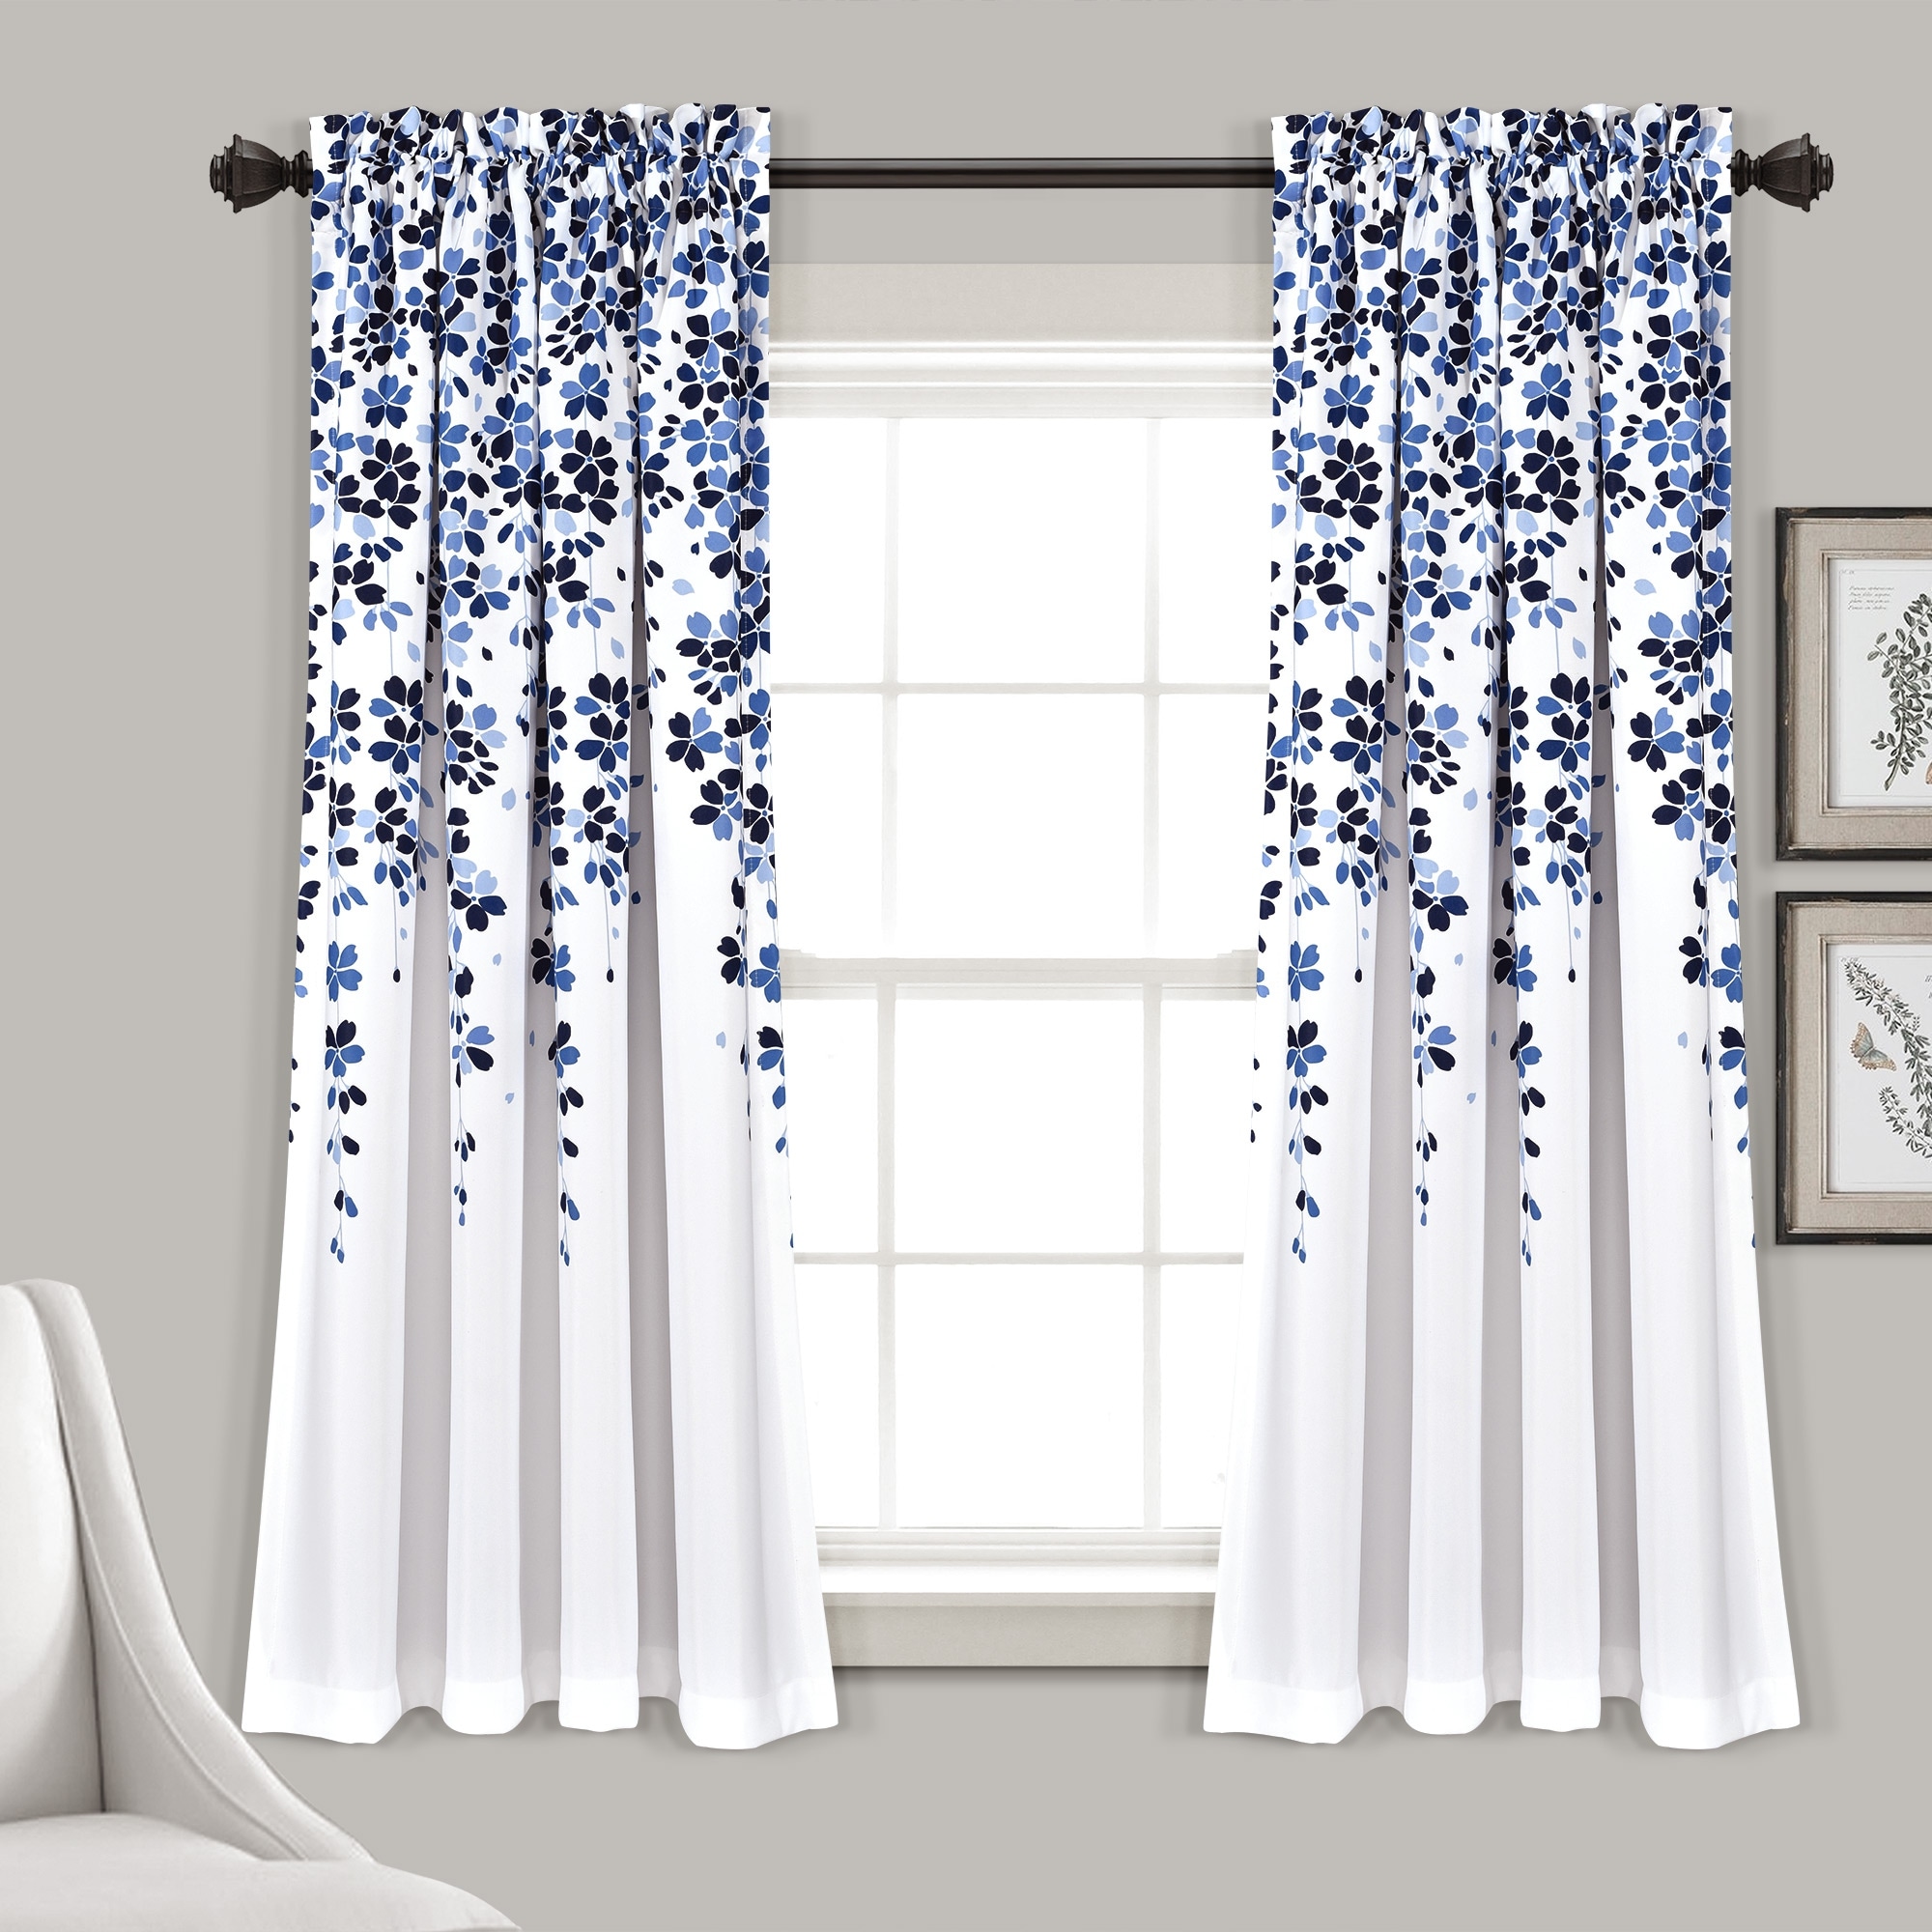  Lush Decor Floral Paisley Room Darkening Window Curtain Panel  Pair, 52W x 84L, Blue : Home & Kitchen